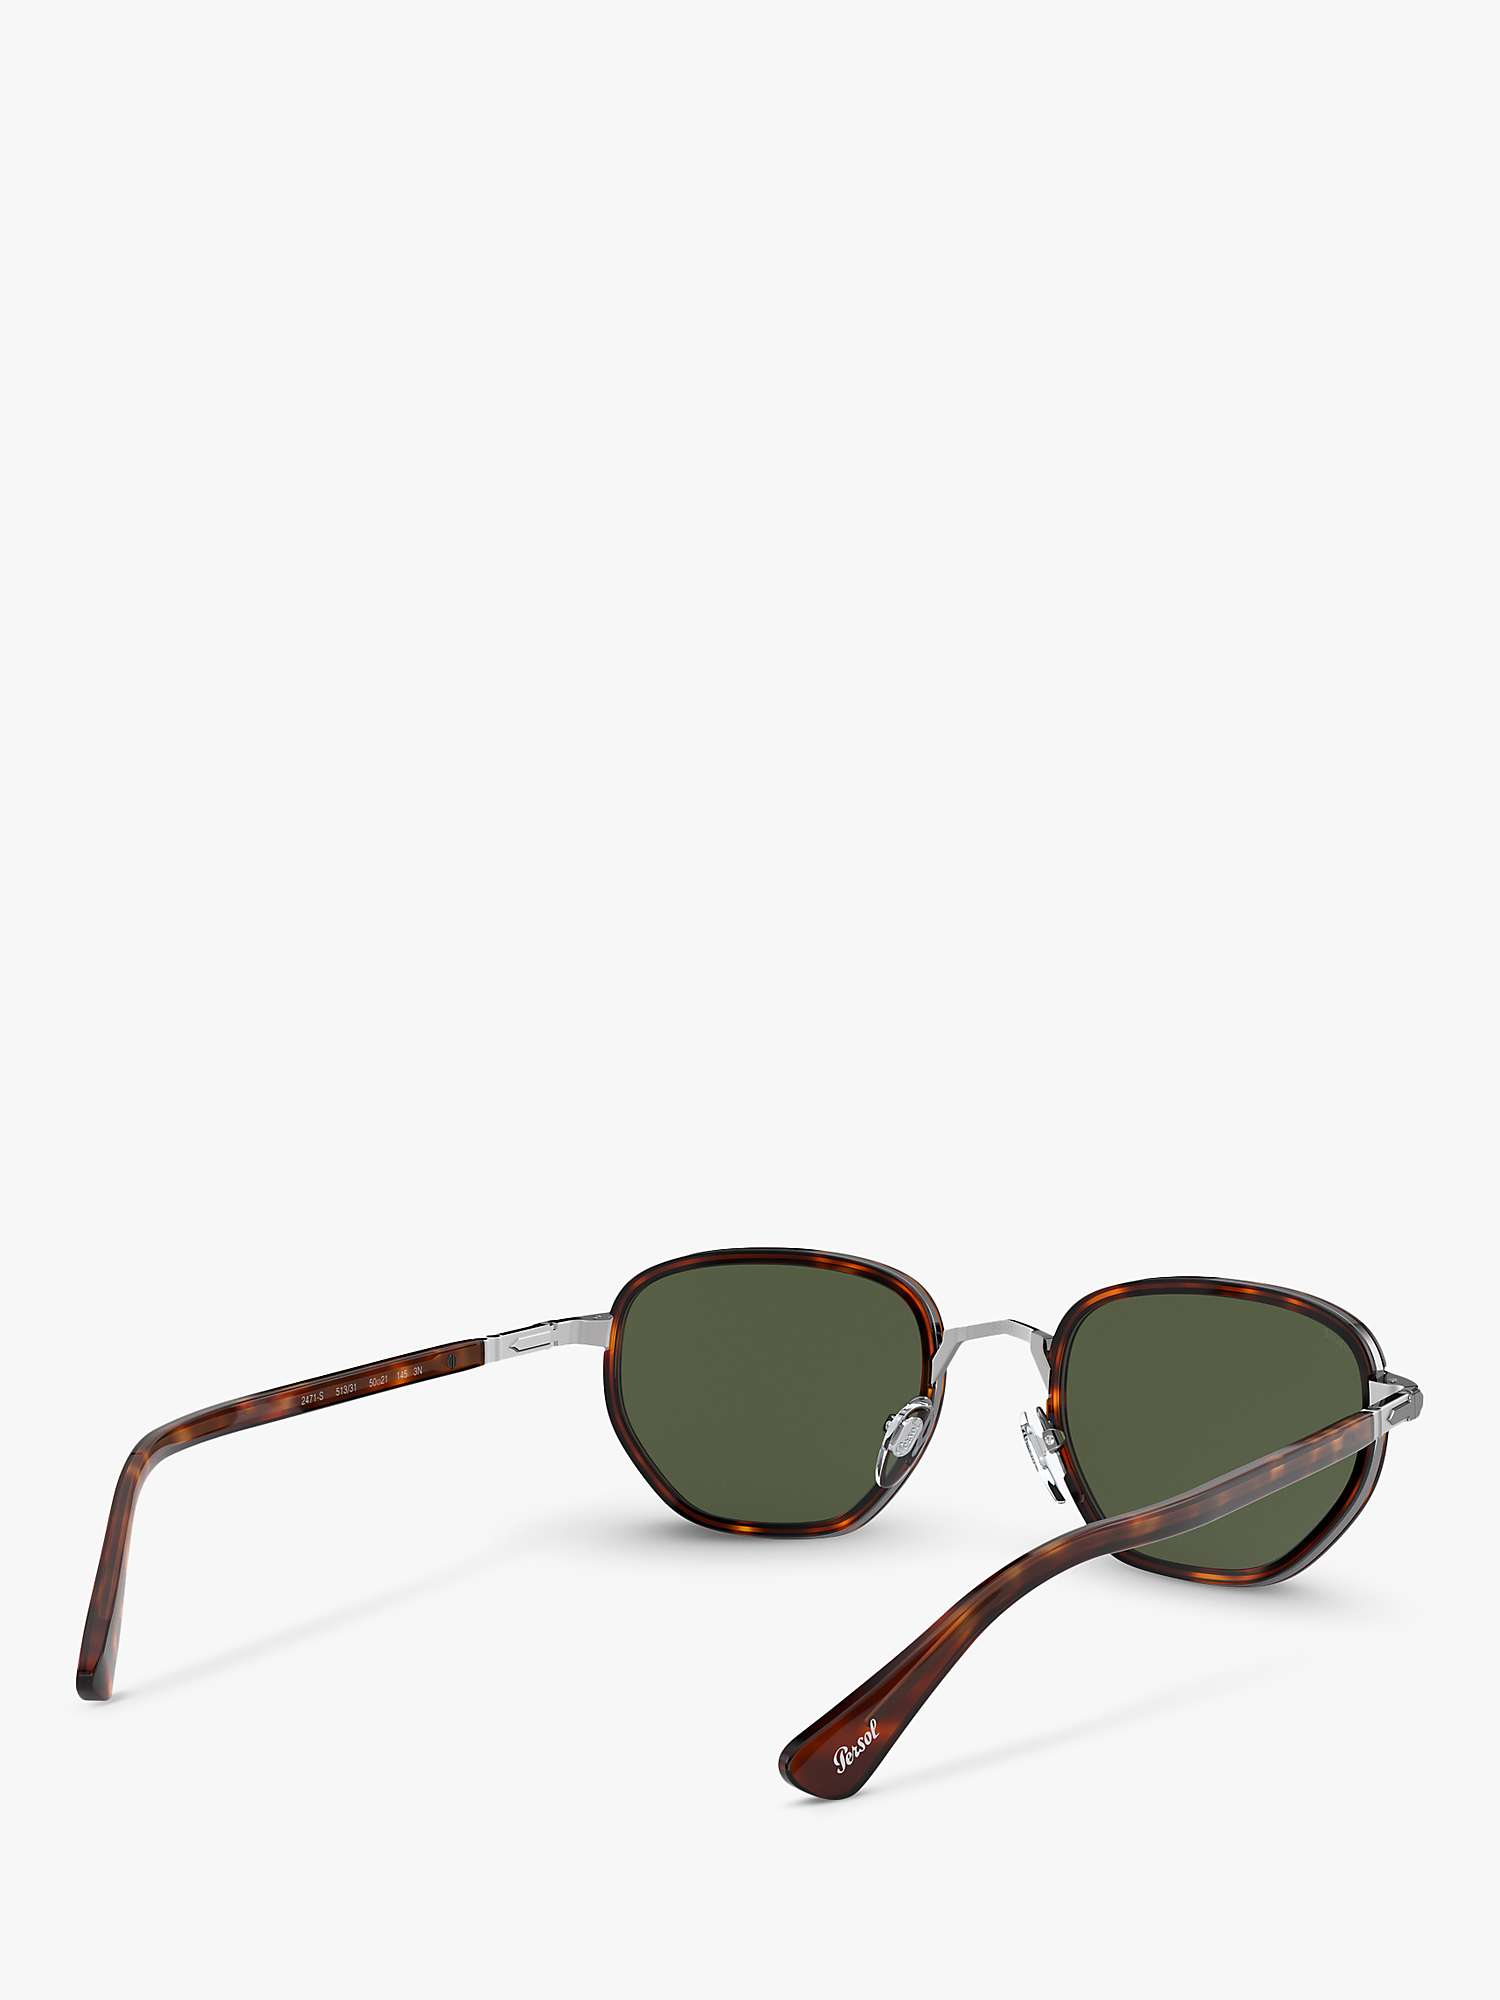 Buy Persol PO2471S Men's Oval Sunglasses Online at johnlewis.com